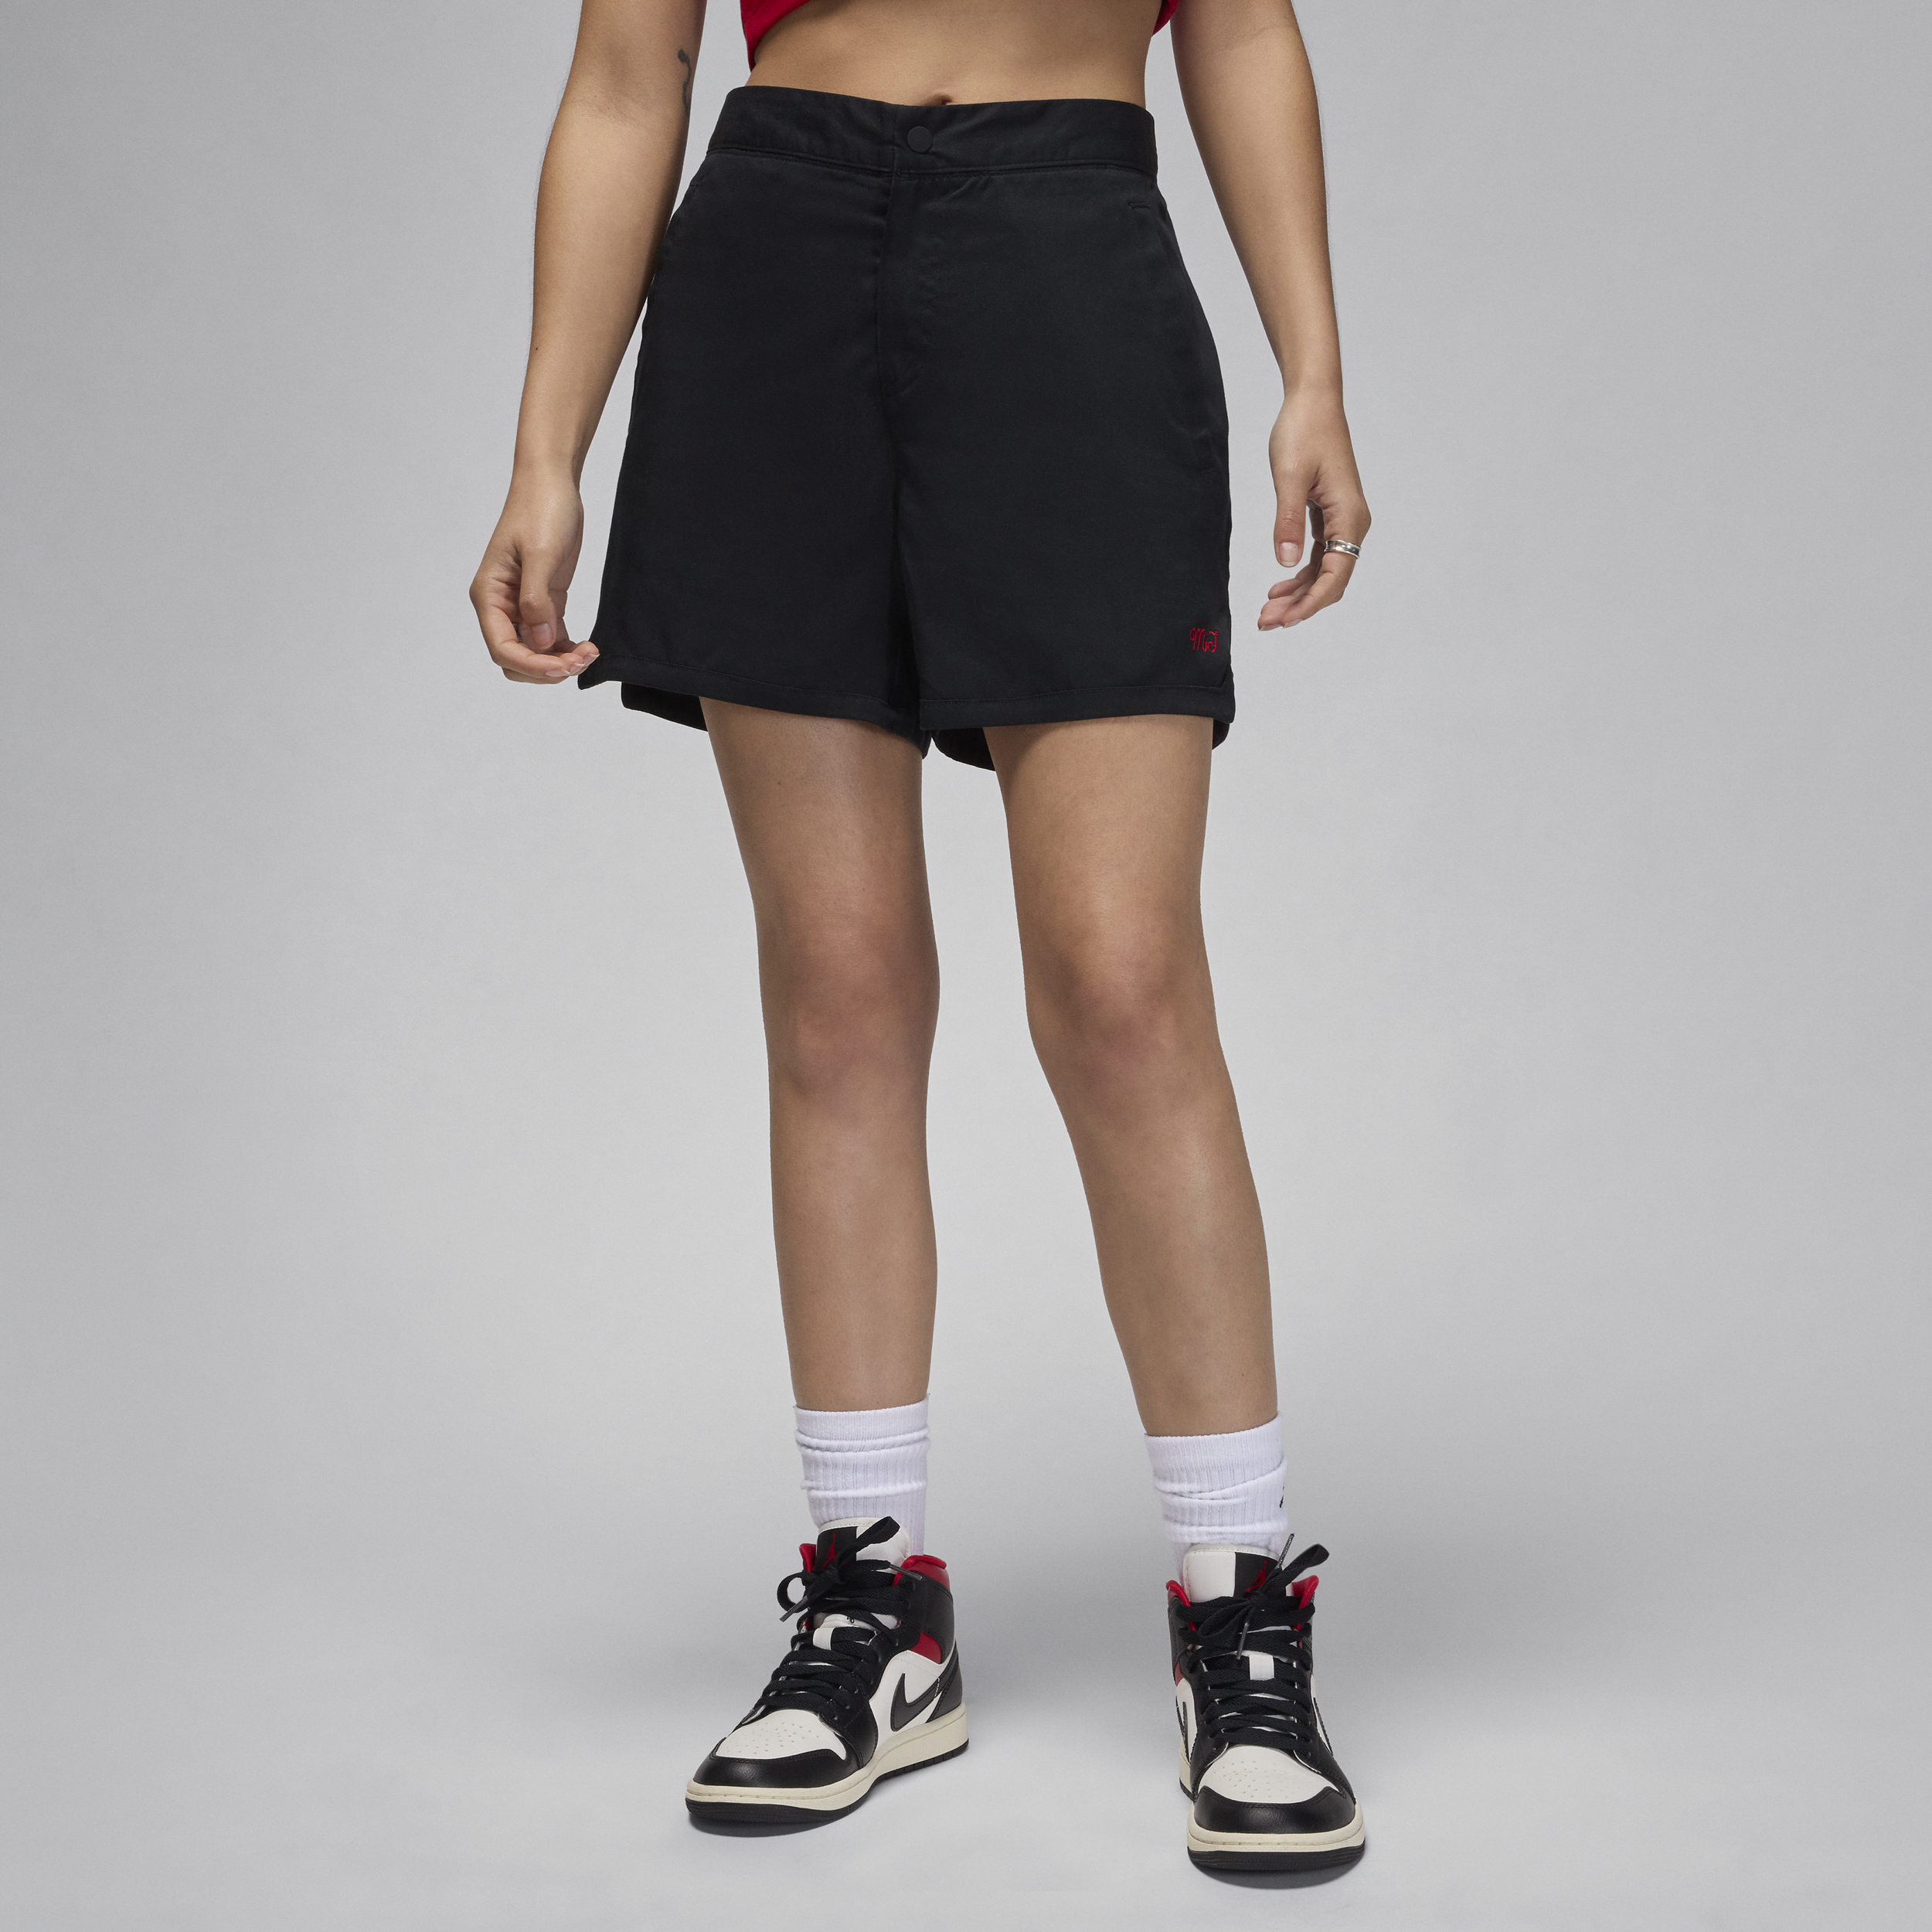 Jordan Pantalón corto de tejido Woven - Mujer - Negro